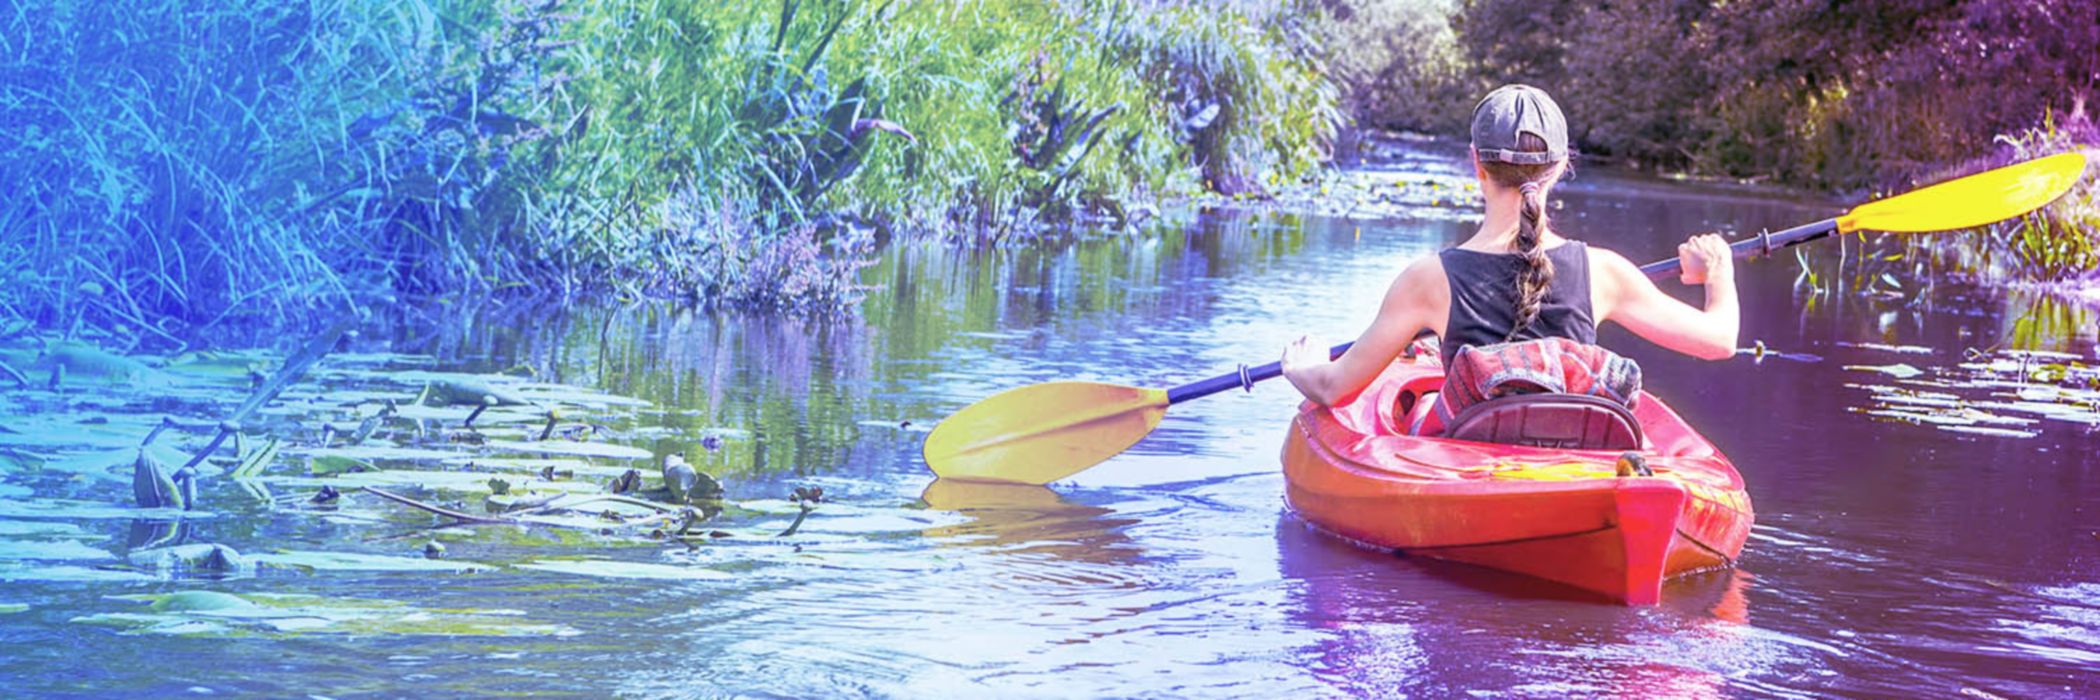 Woman paddling in a kayak